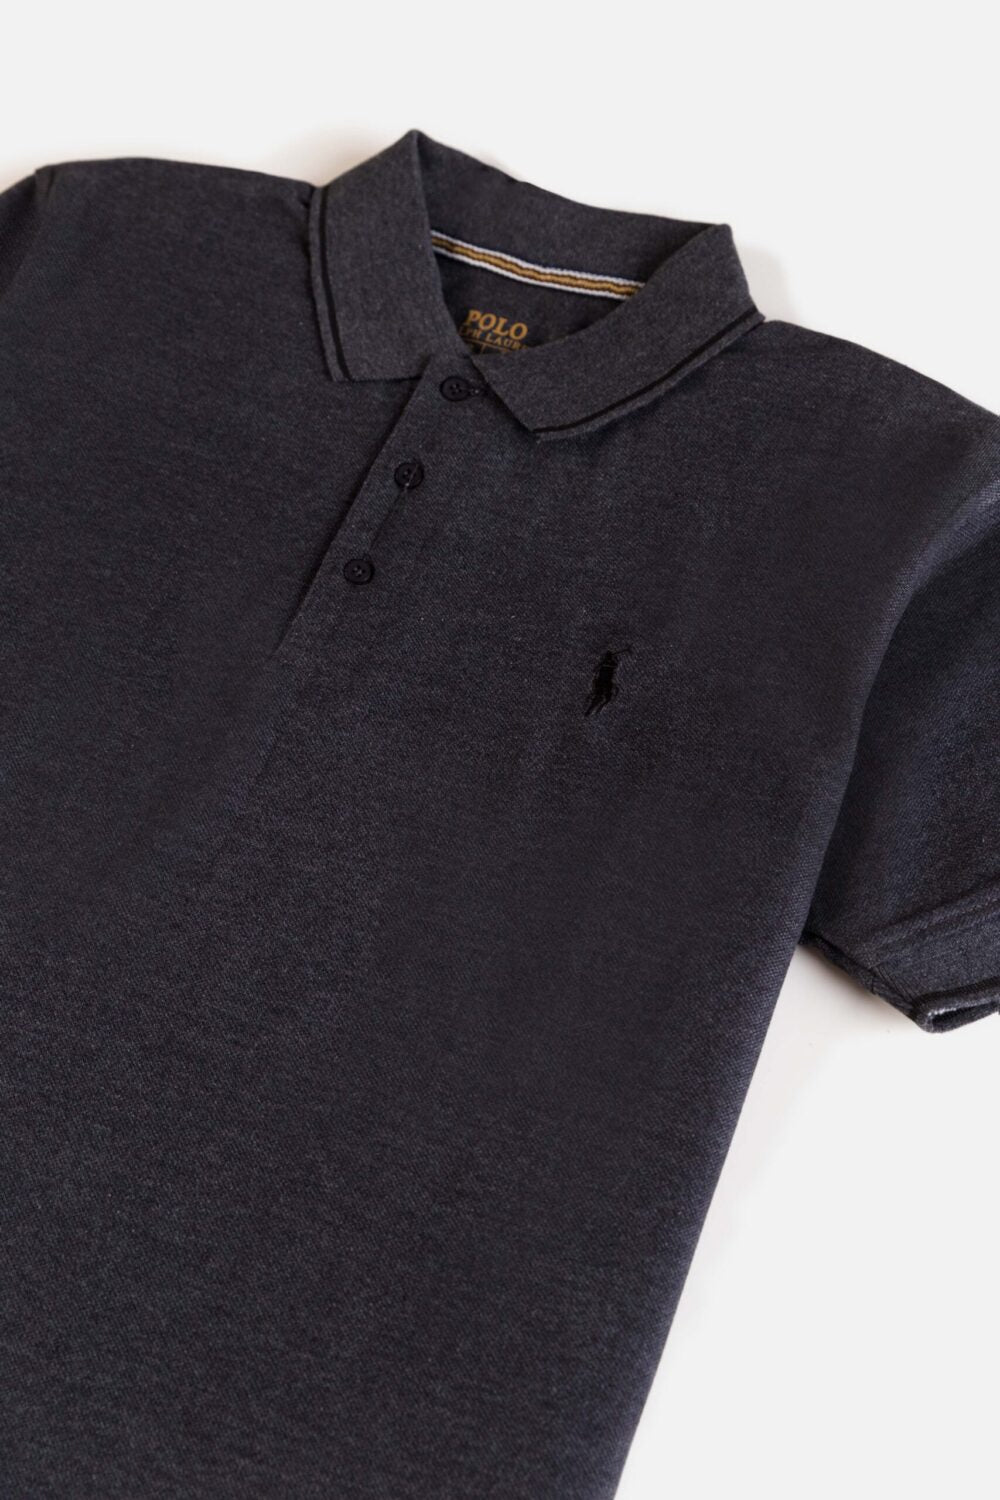 RL Premium Tipping Polo Shirt – Charcoal